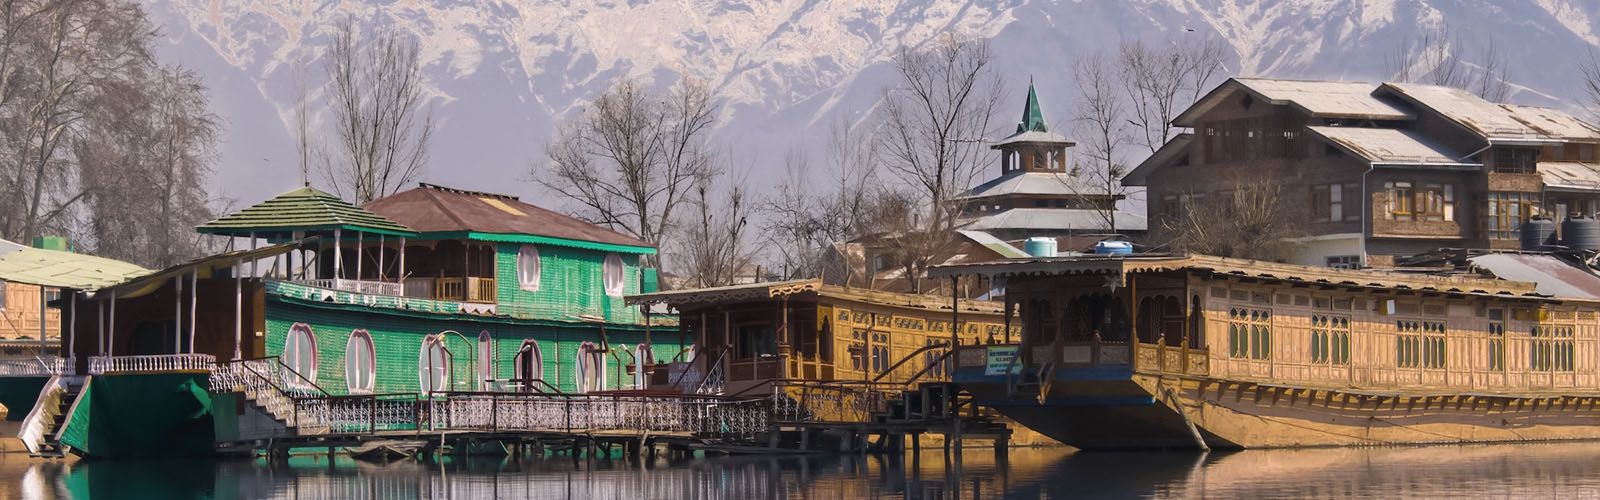 Kashmir Great Lakes